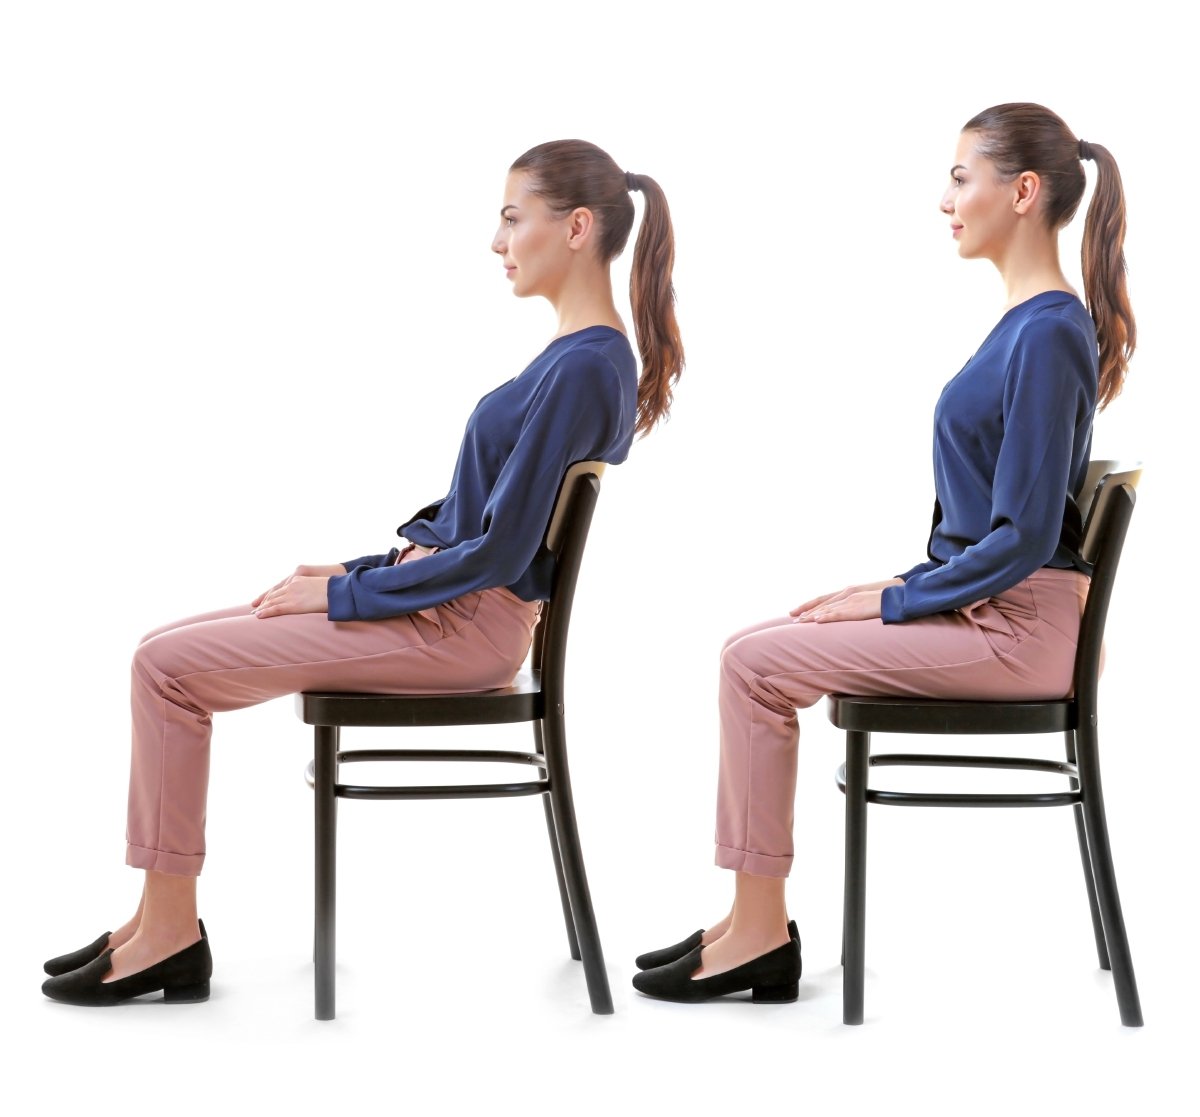 PERLU jaga postur duduk dan berjalan untuk kurangkan impak fungsi sistem berkenaan merosot.  - FOTO Google